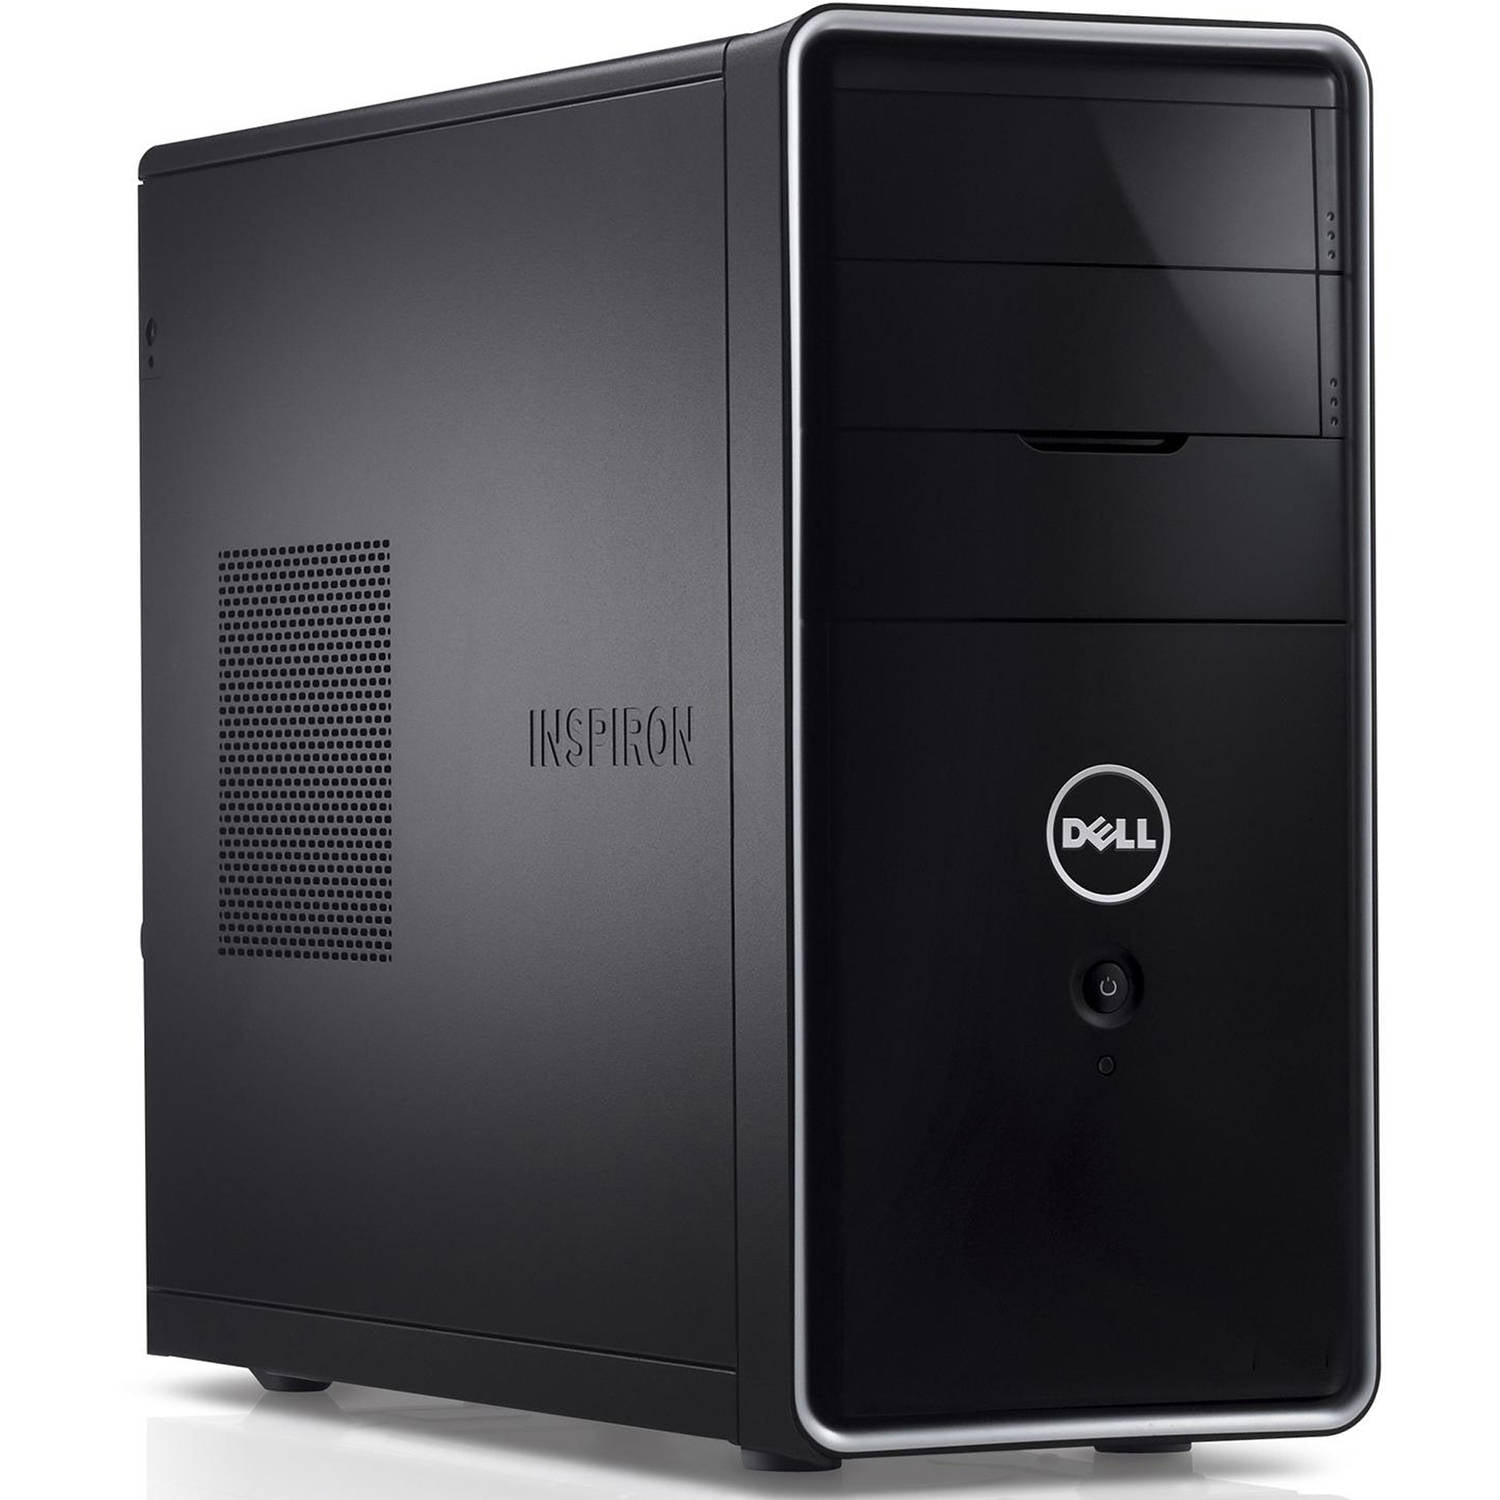 Refurbished Dell Inspiron 660-6987BK Desktop PC with Intel Core i5-3330